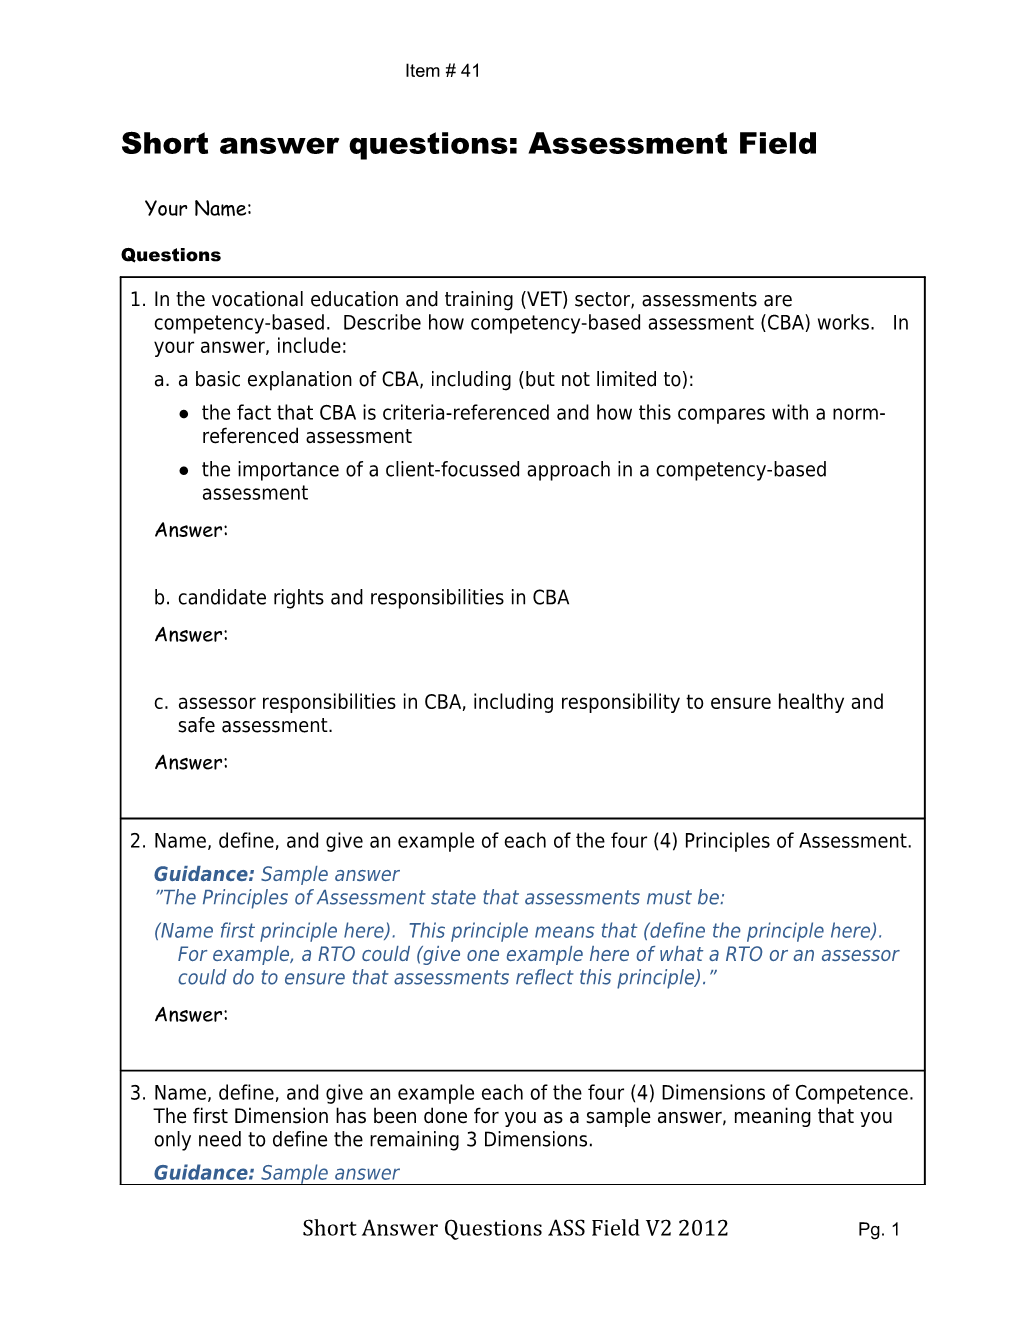 Short Answer Questions: Assessment Field